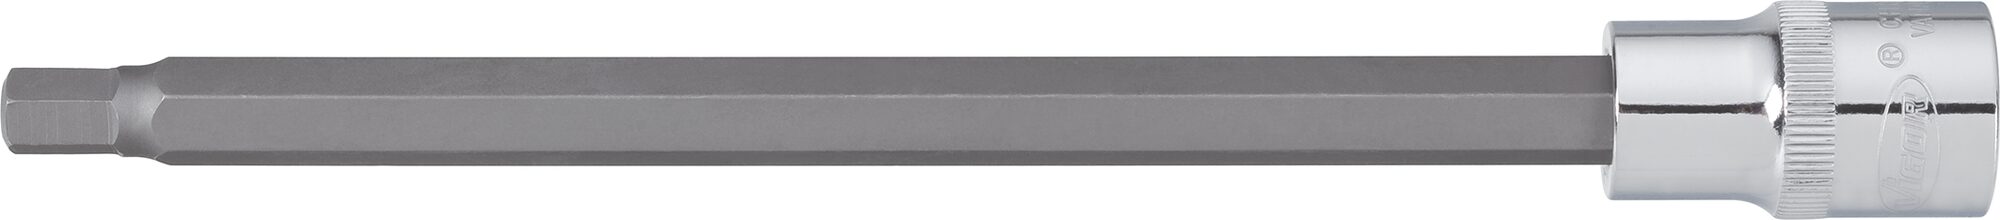 VIGOR Innensechskant Schraubendreher-Einsatz · V2088 · Vierkant hohl 12,5 mm (1/2 Zoll) · Innen Sechskant Profil · 6 mm